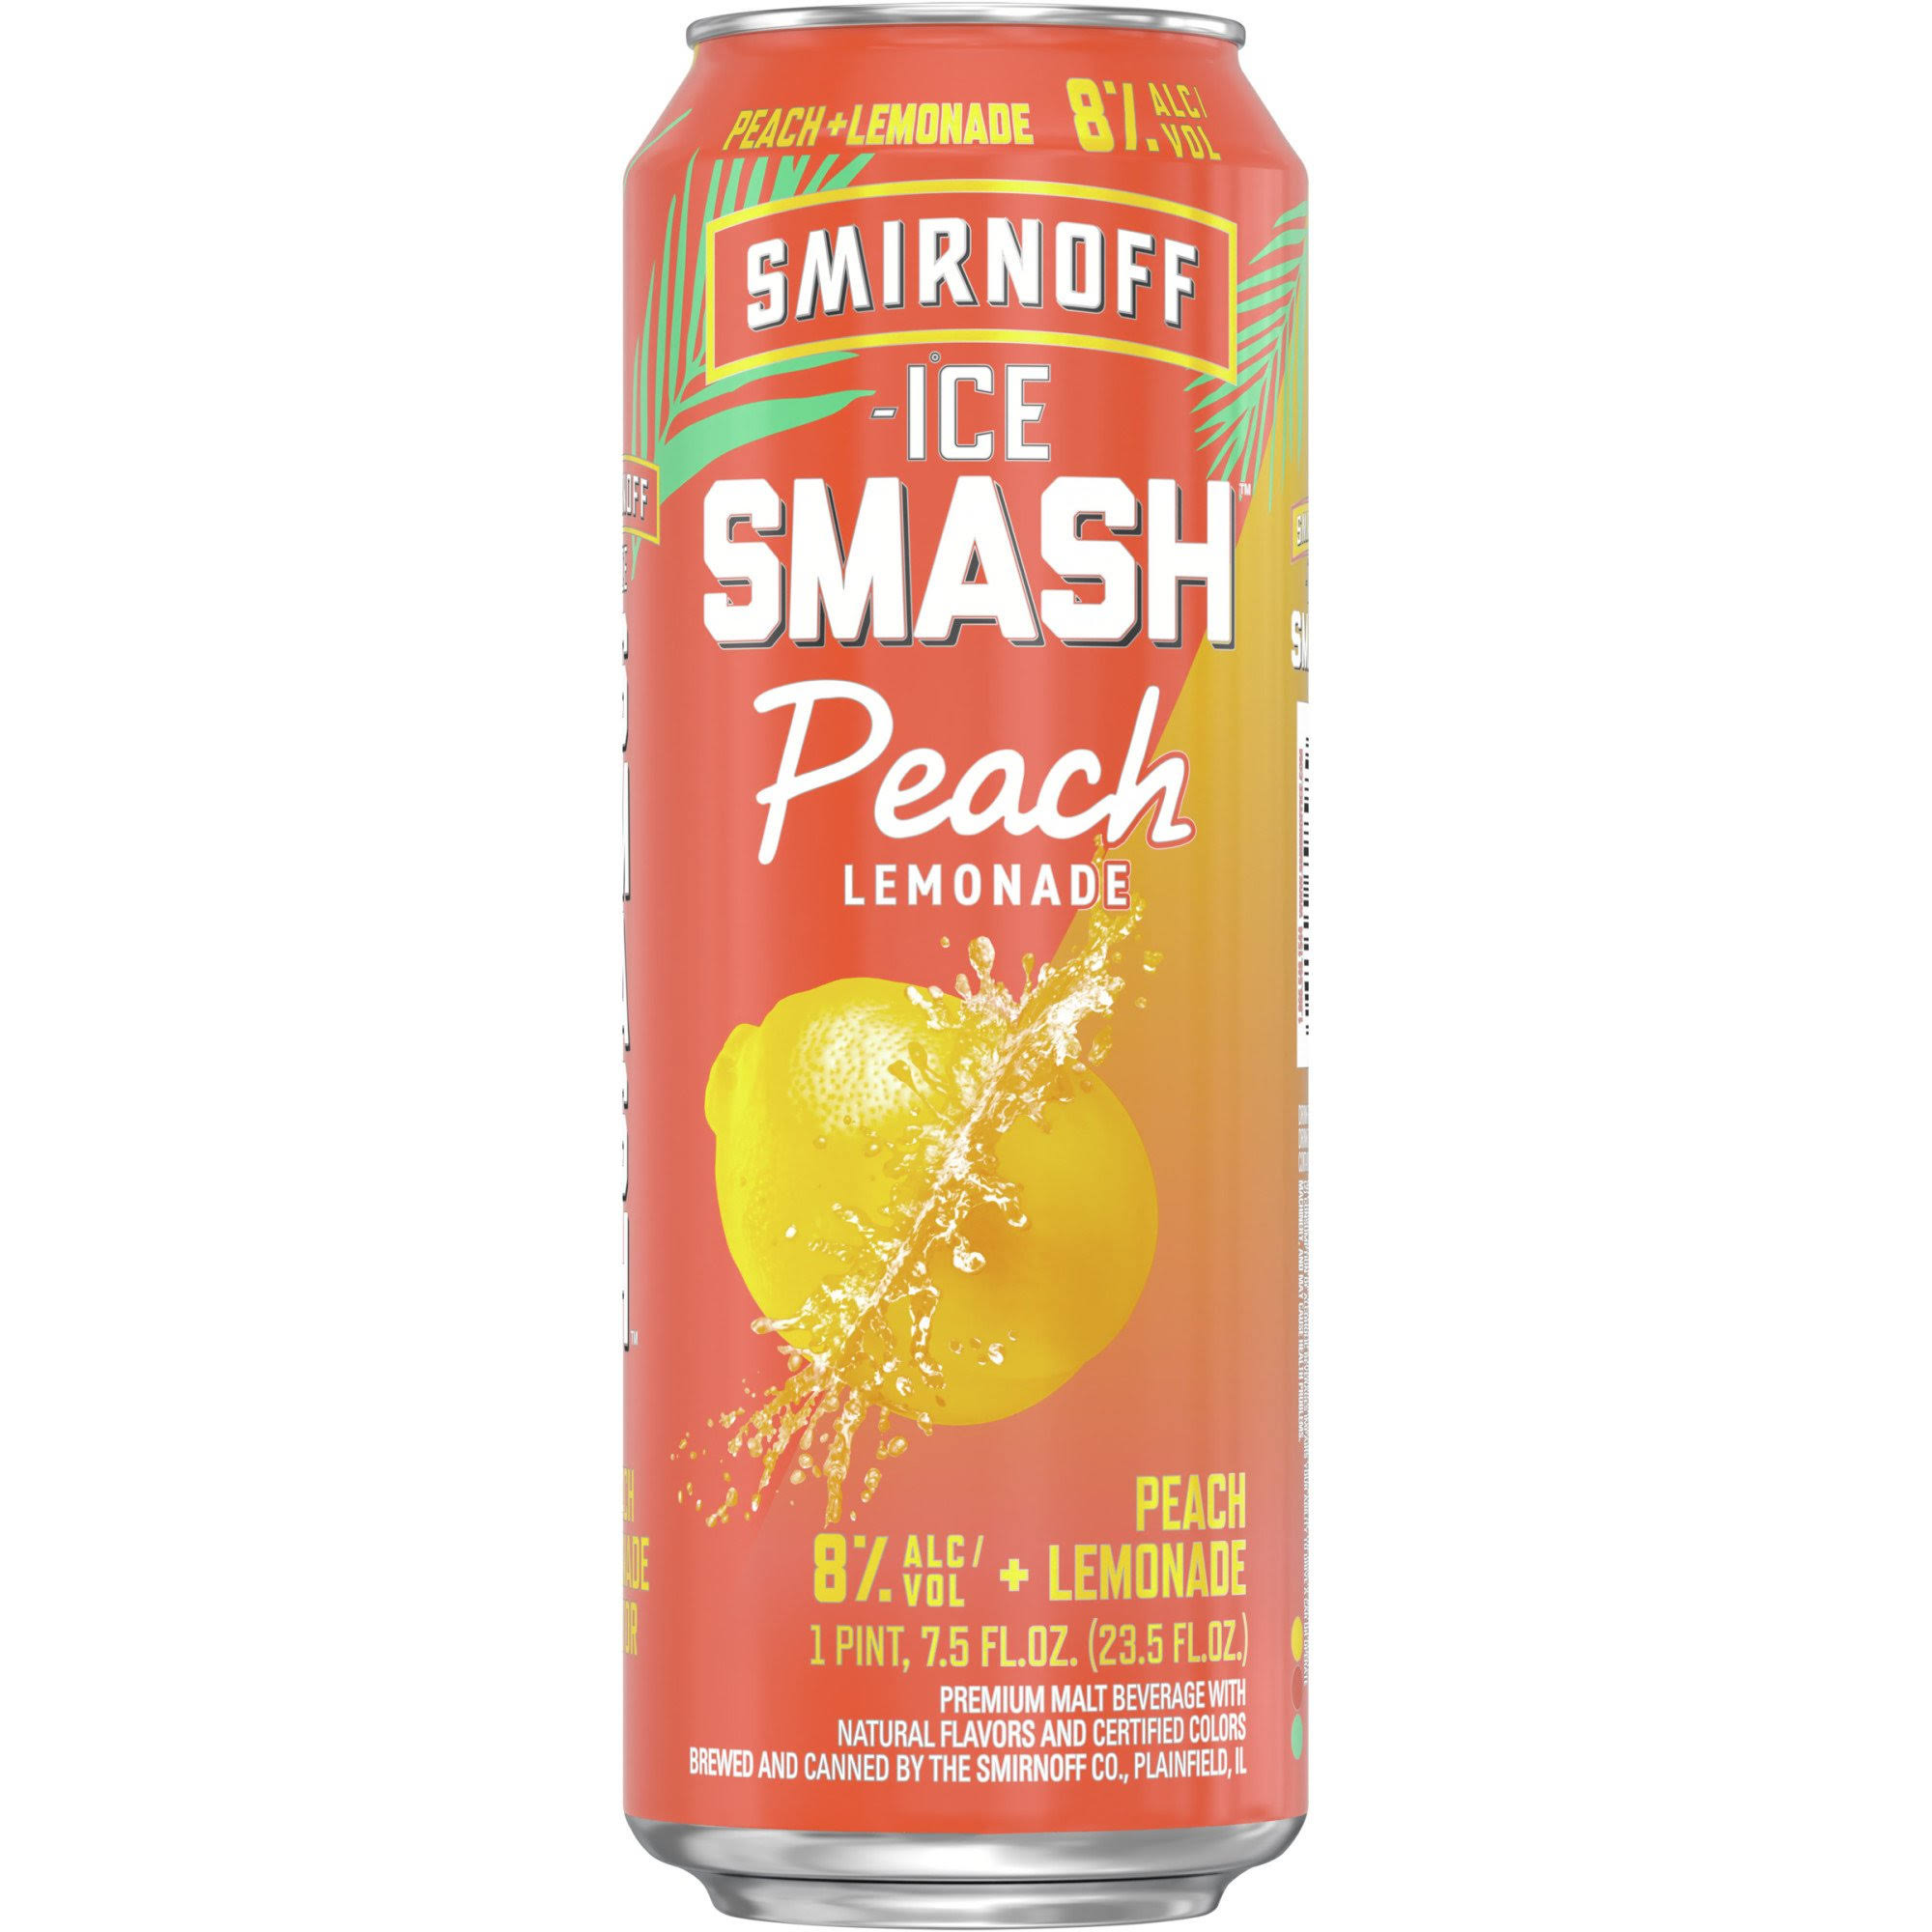 Smirnoff Ice - Smash Peach Lemonade (24oz can)